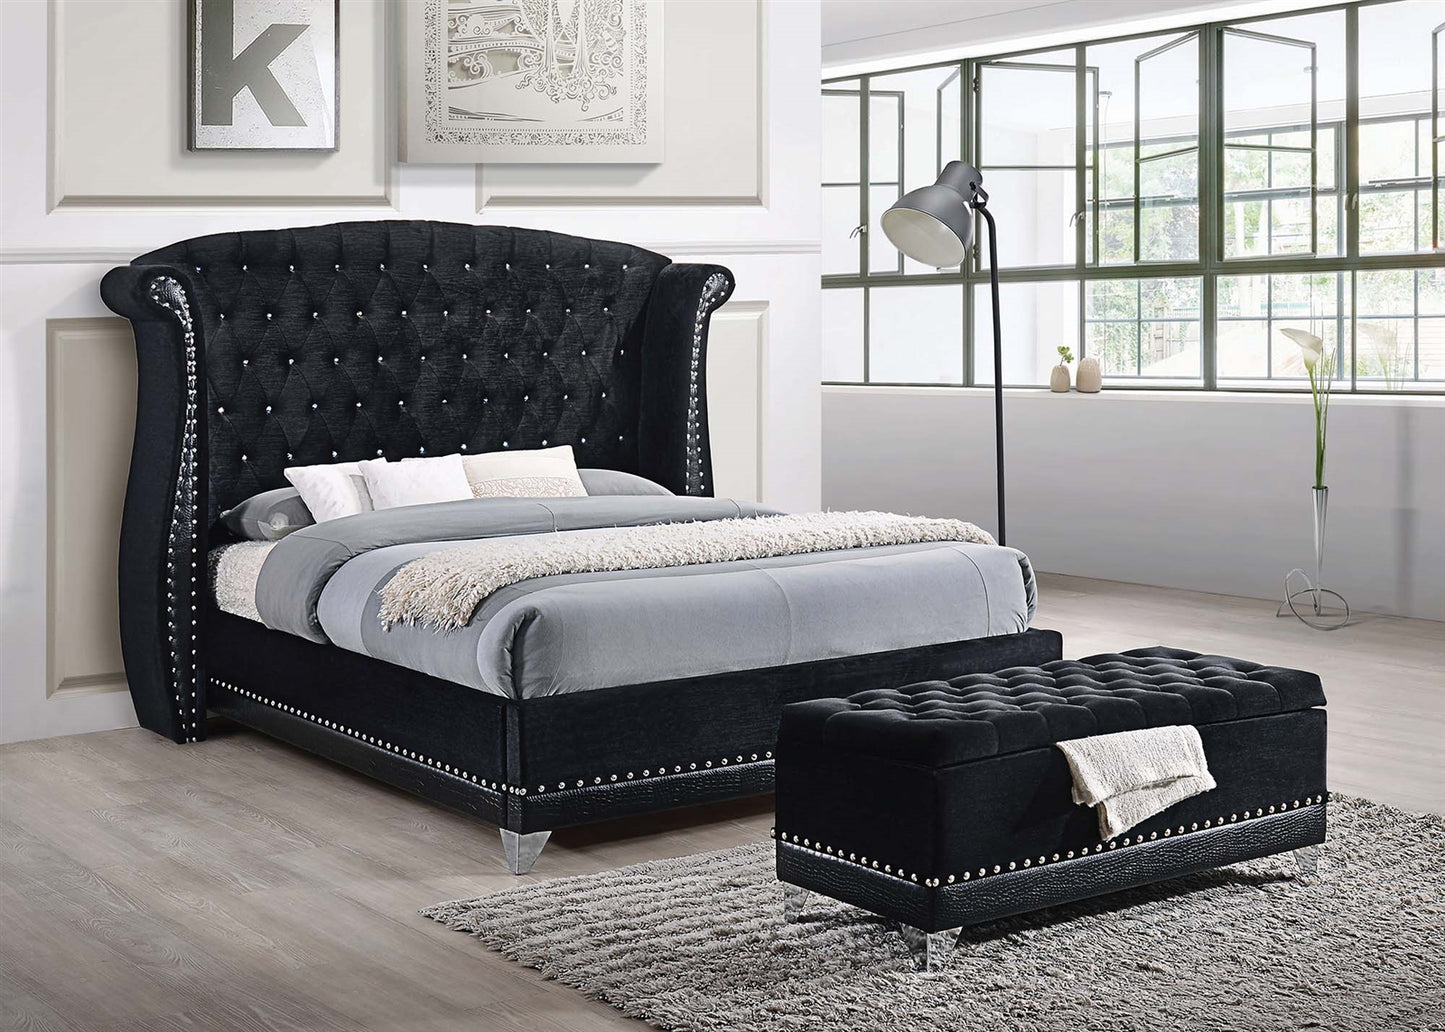 Barzini Modern Black Velvet Queen Bed with Silver Stud Trim & Chrome Feet